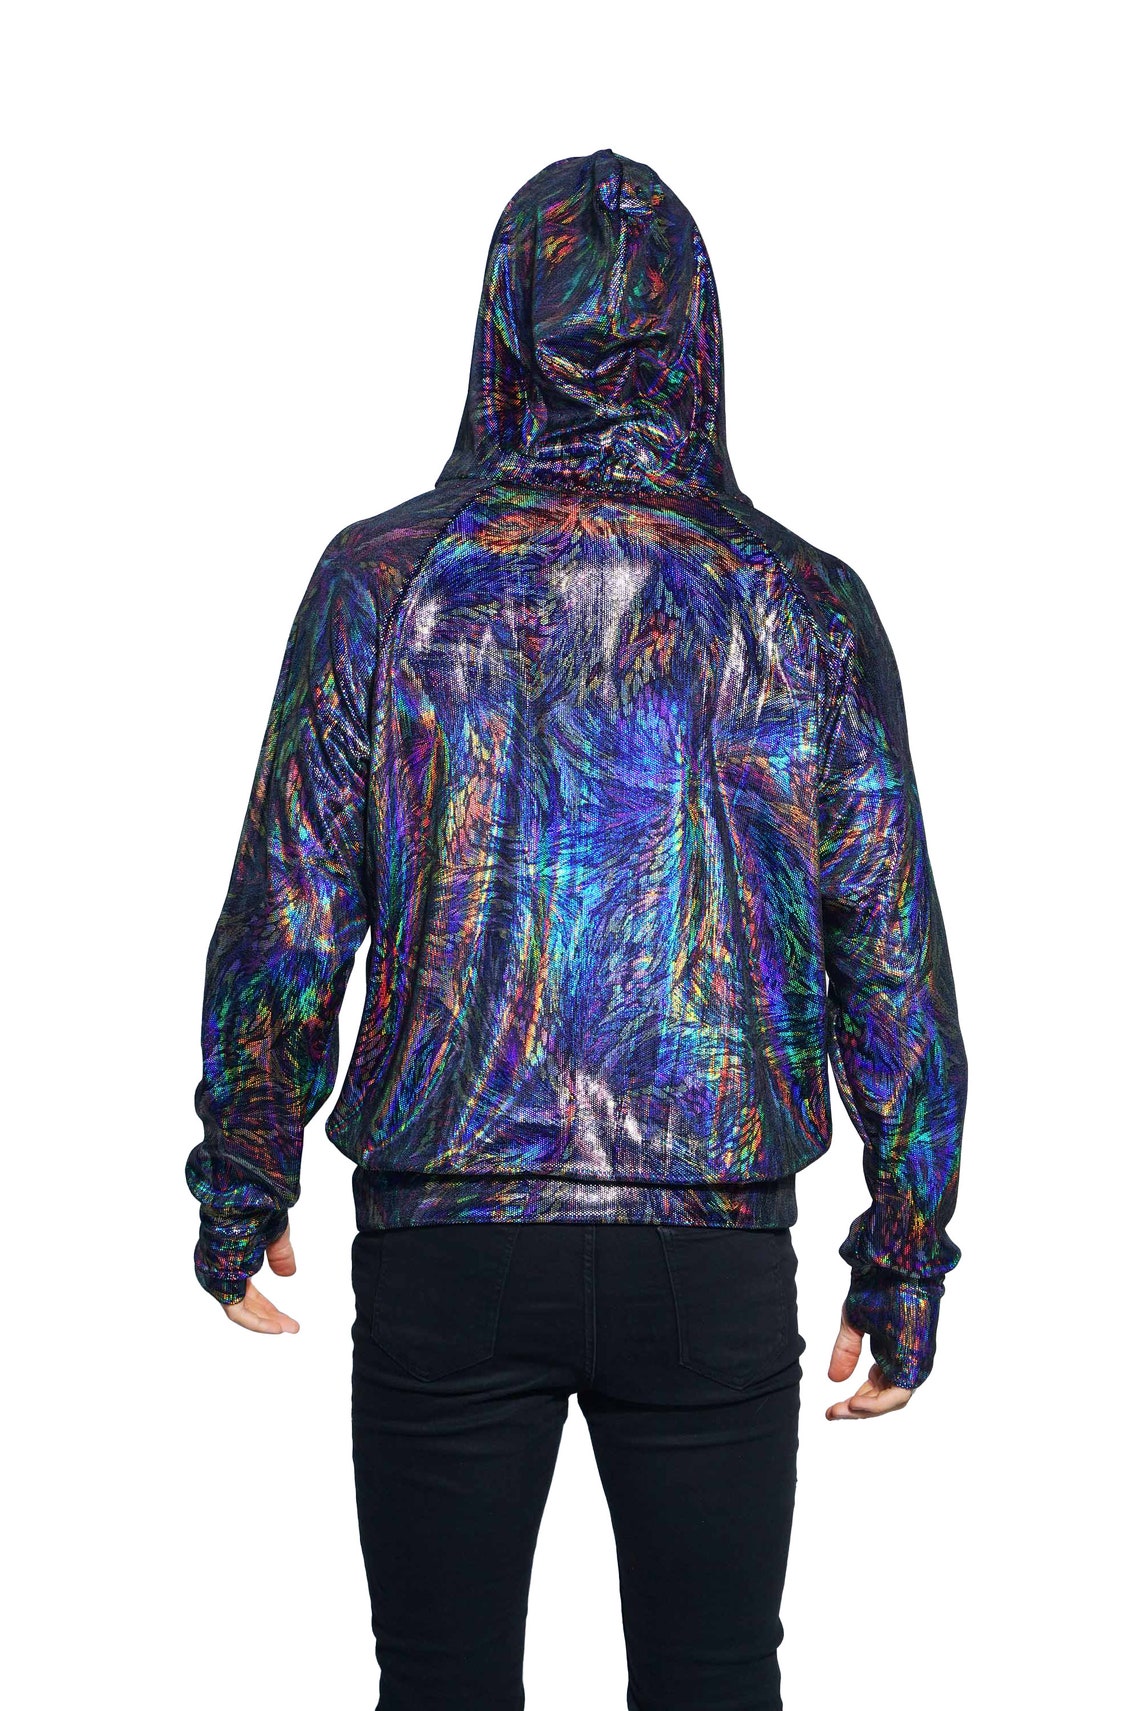 Holographic Hoodie velvet sweatshirt festival jacket mens | Etsy